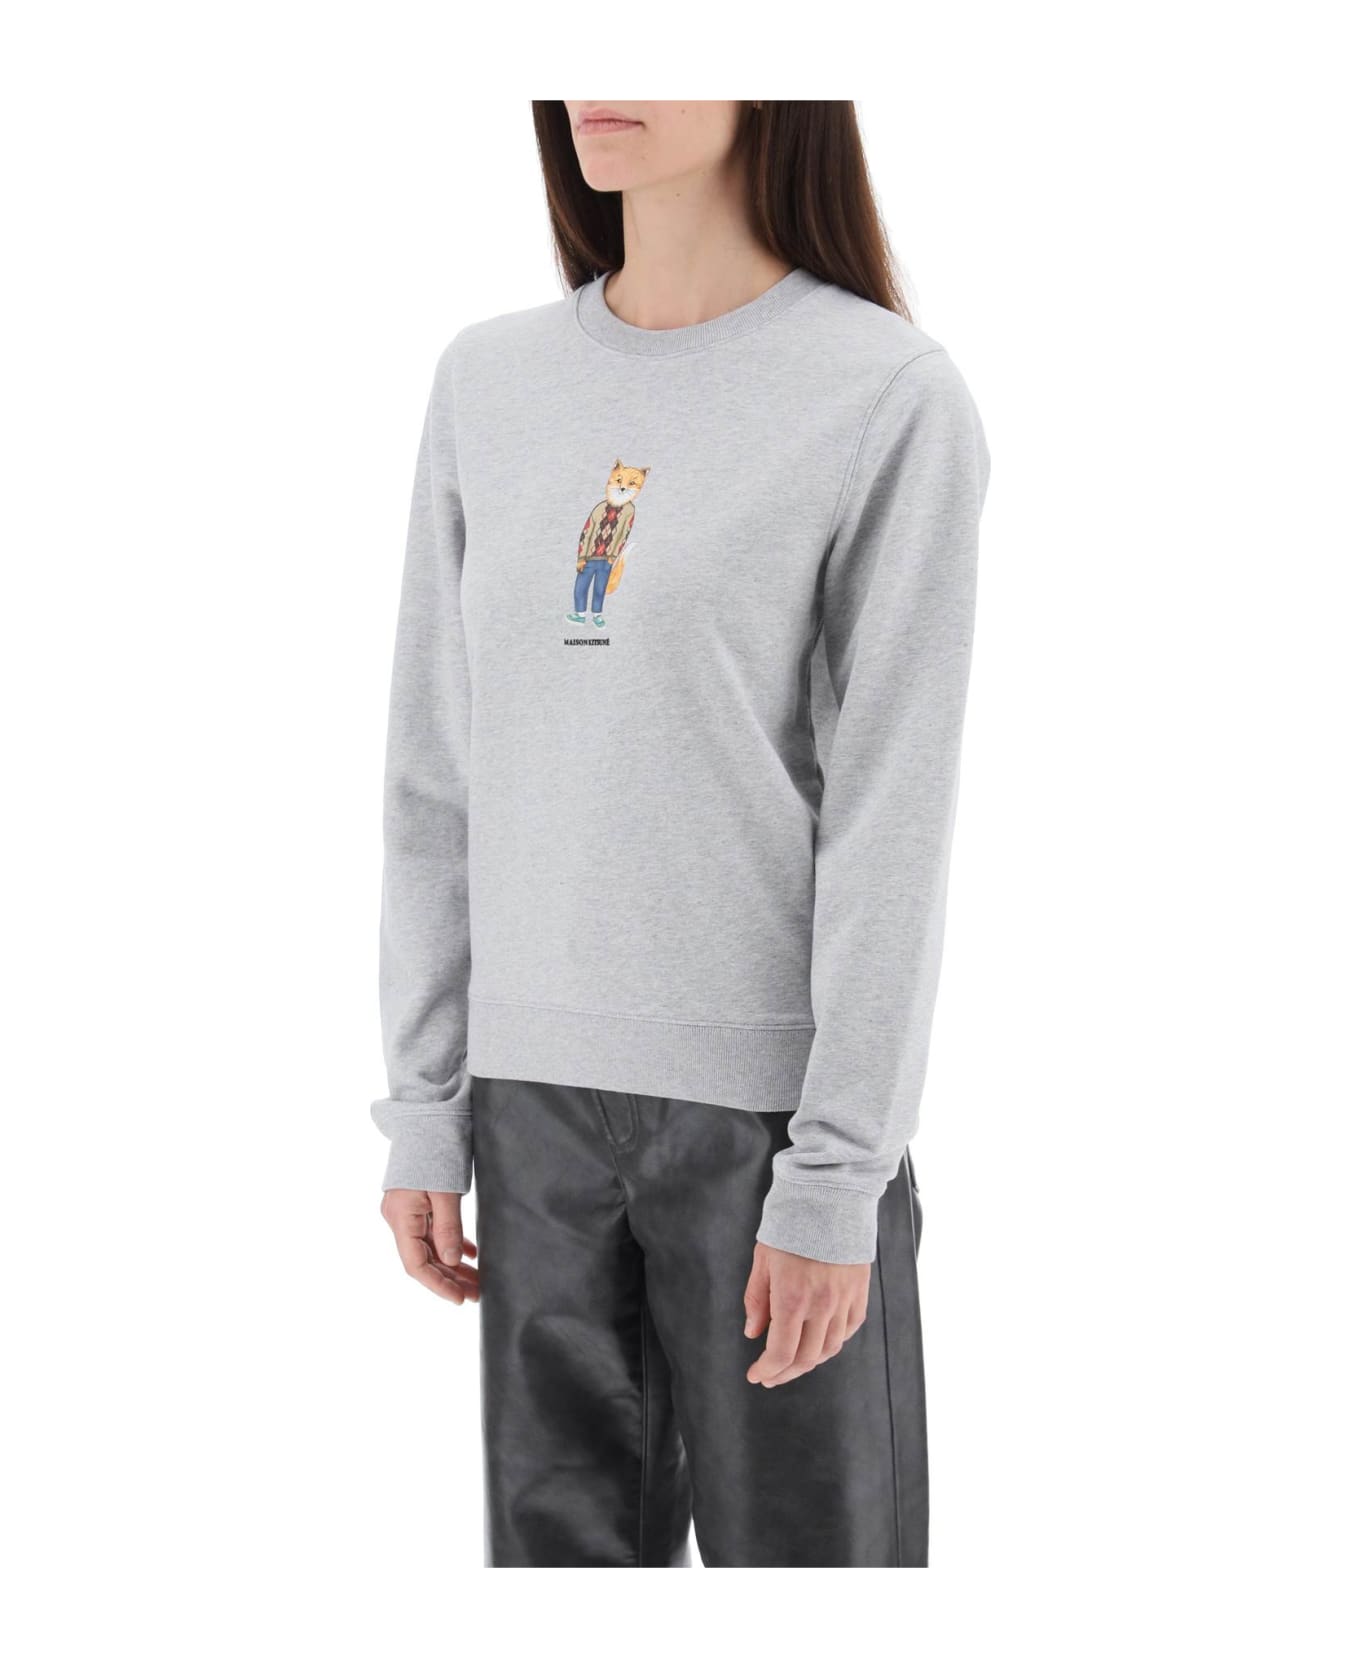 Maison Kitsuné Dressed Fox Sweatshirt - LIGHT GREY MELANGE (Grey)